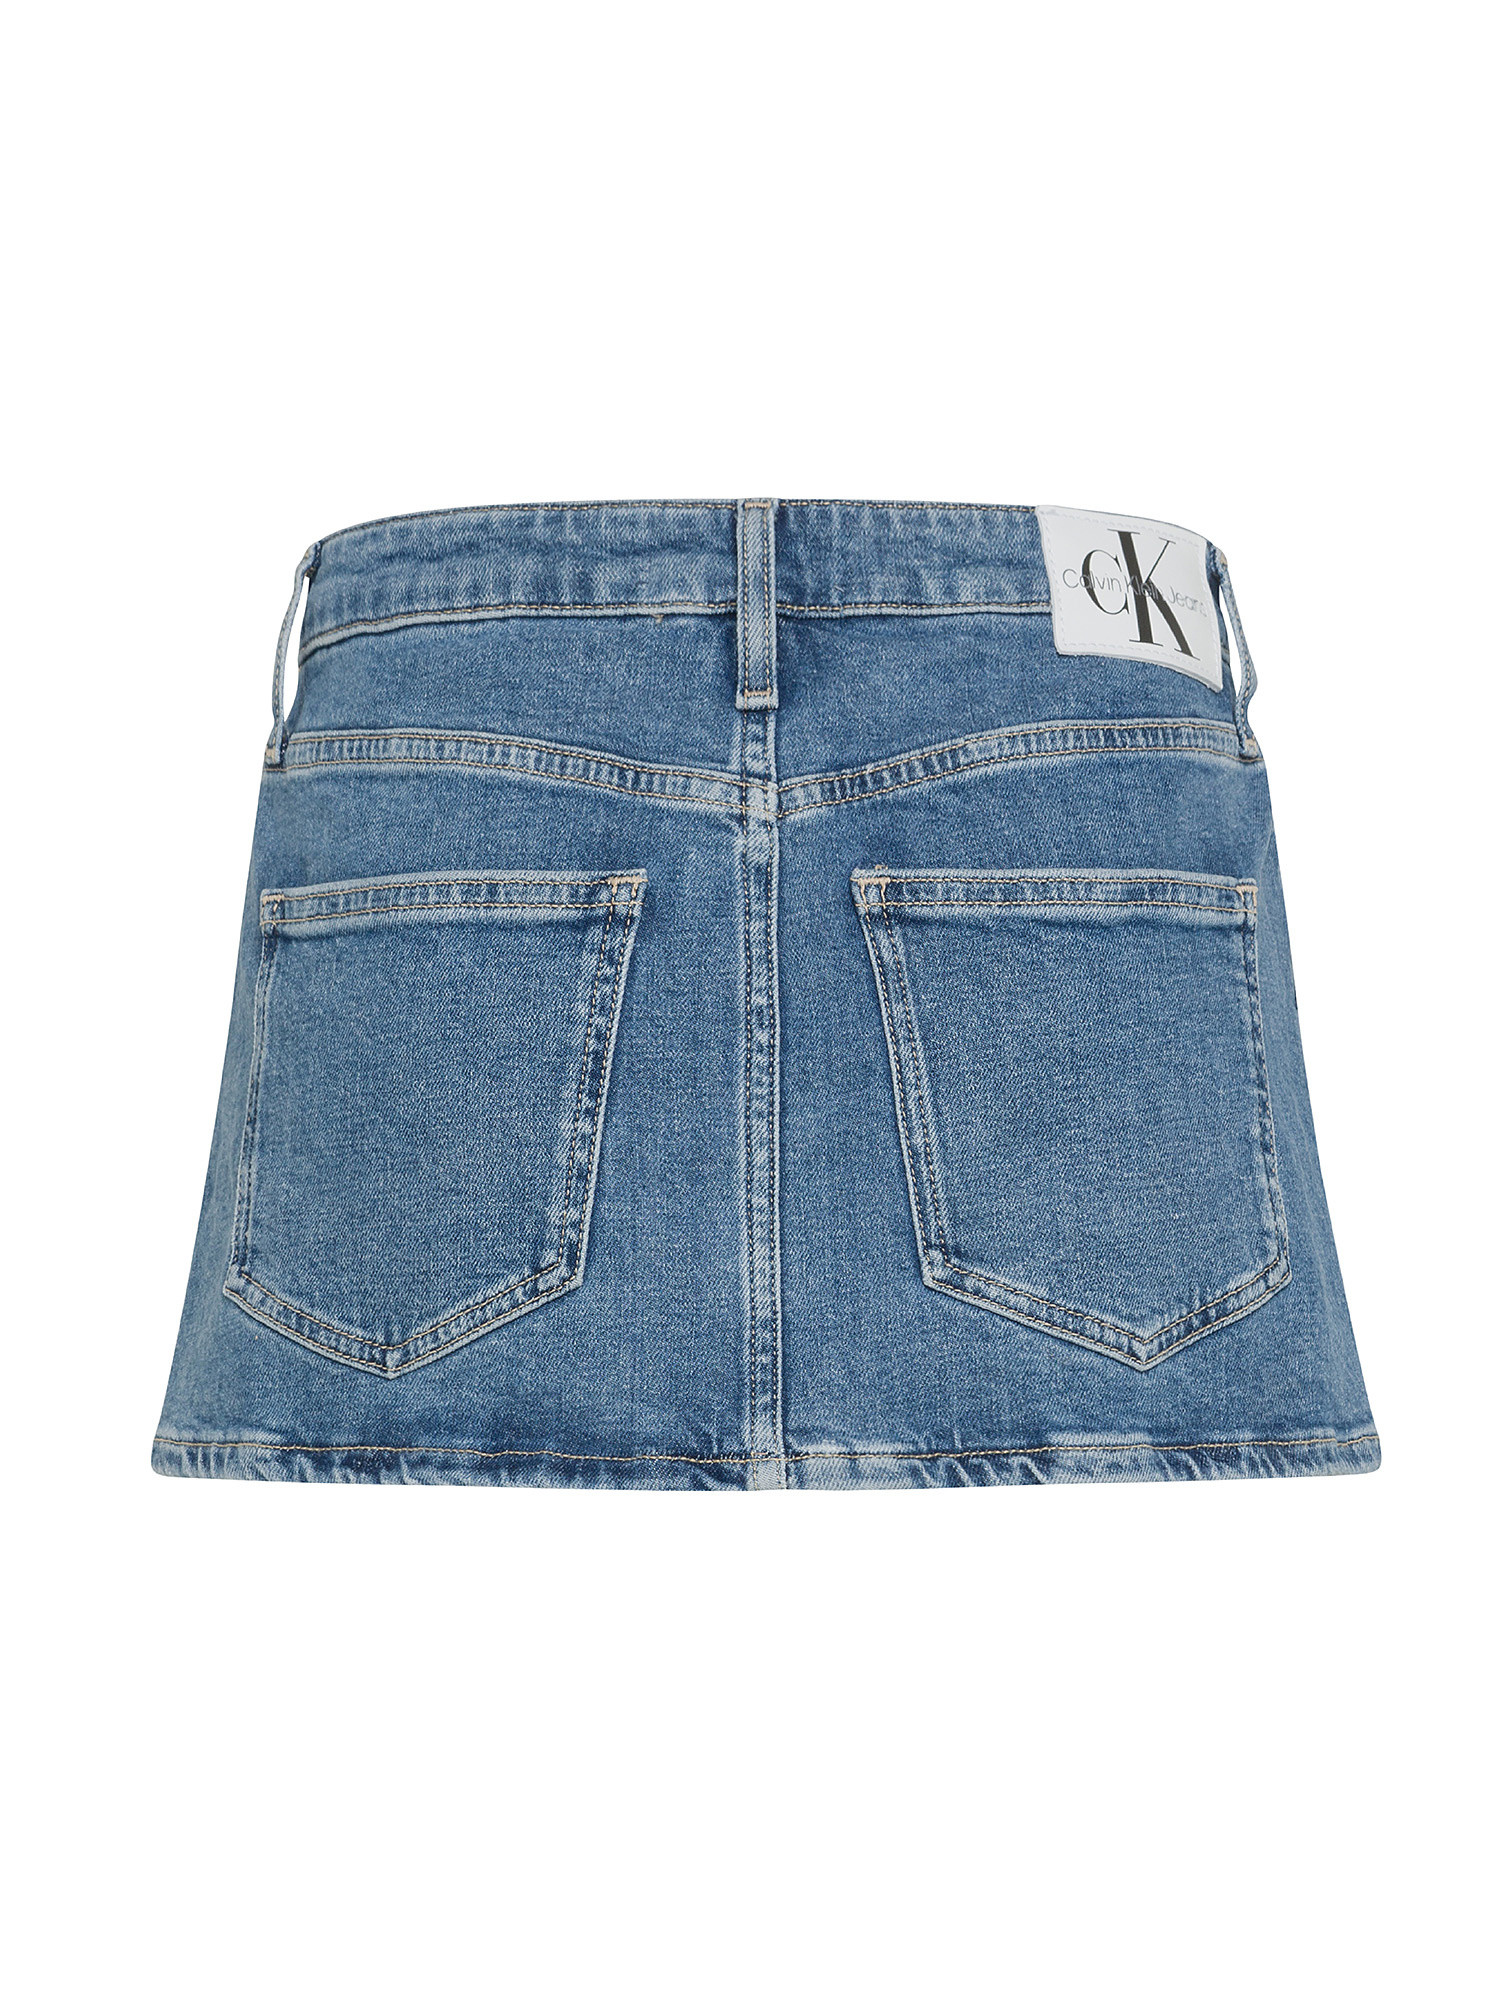 Calvin Klein Jeans - Stretch cotton denim mini skirt, Denim, large image number 1